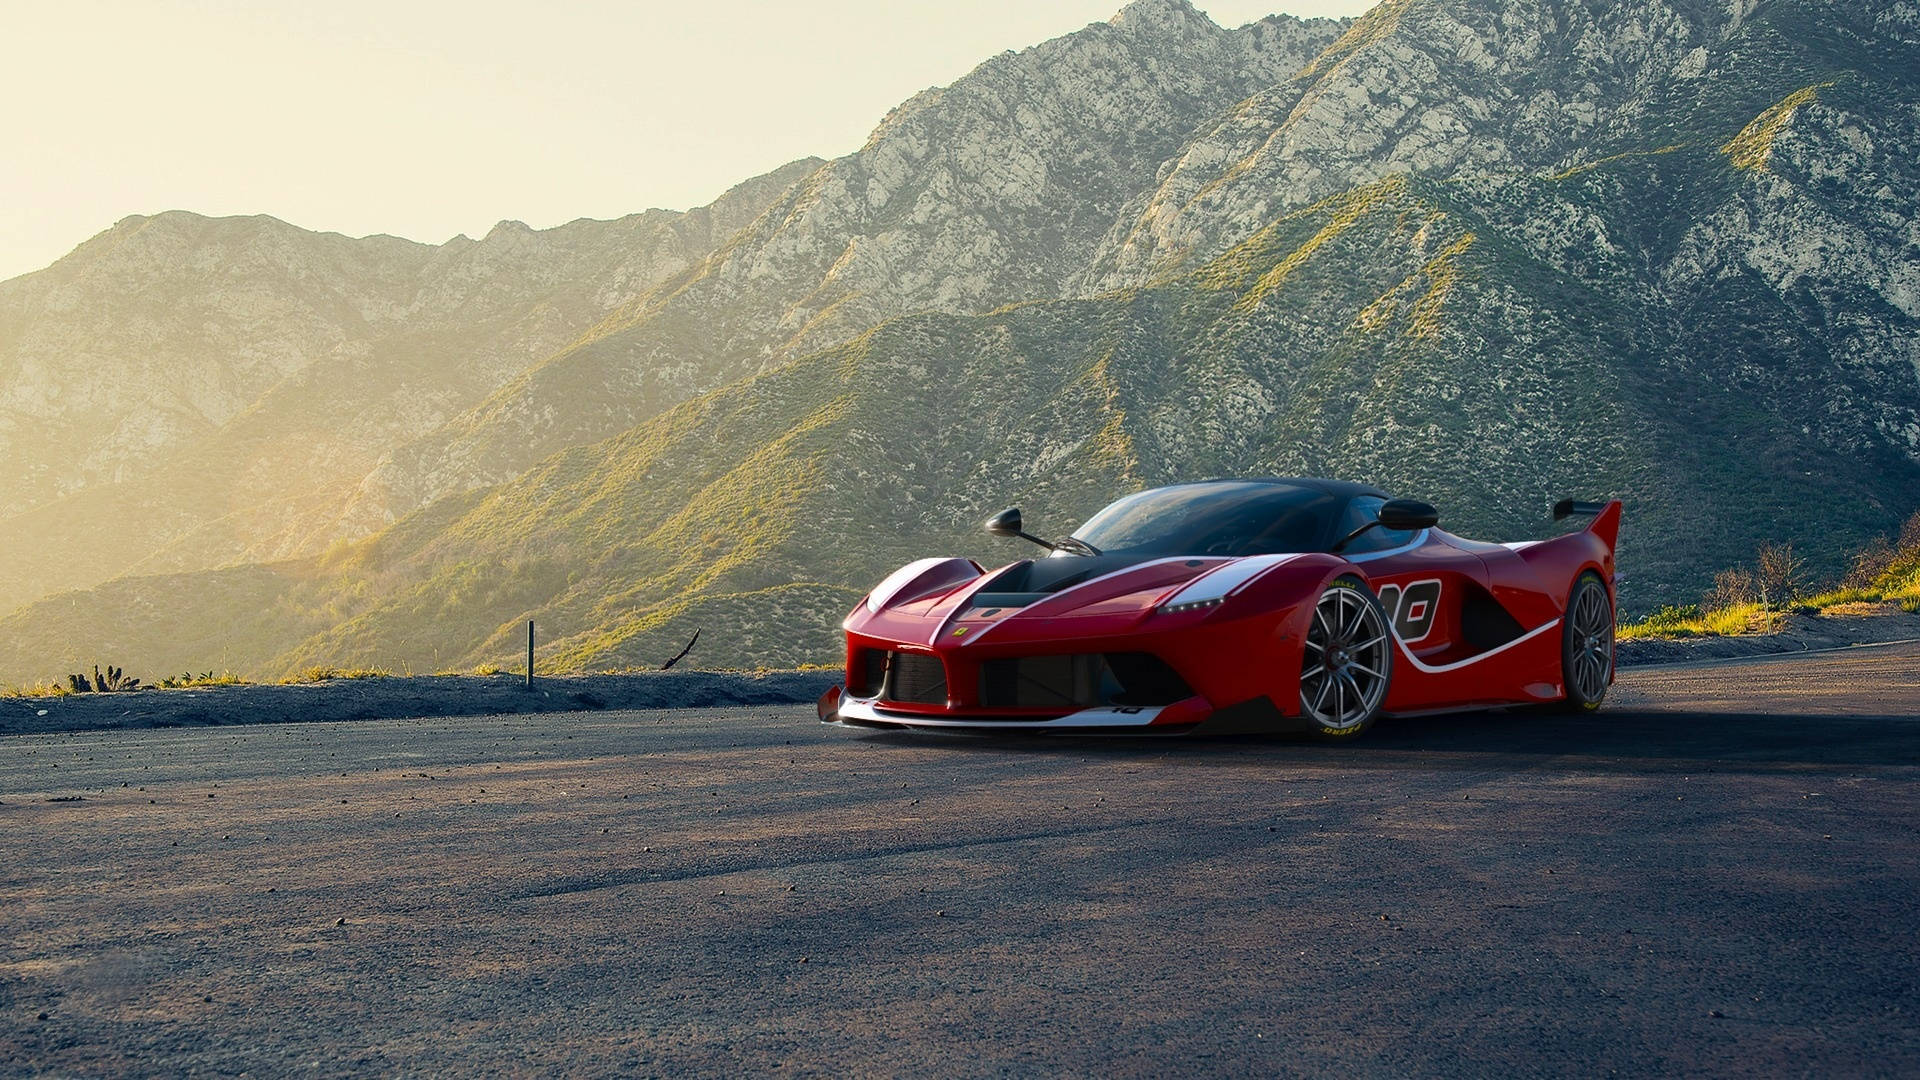 Enjoy The Speed Behind The Wheel Of A Ferrari Wallpaper